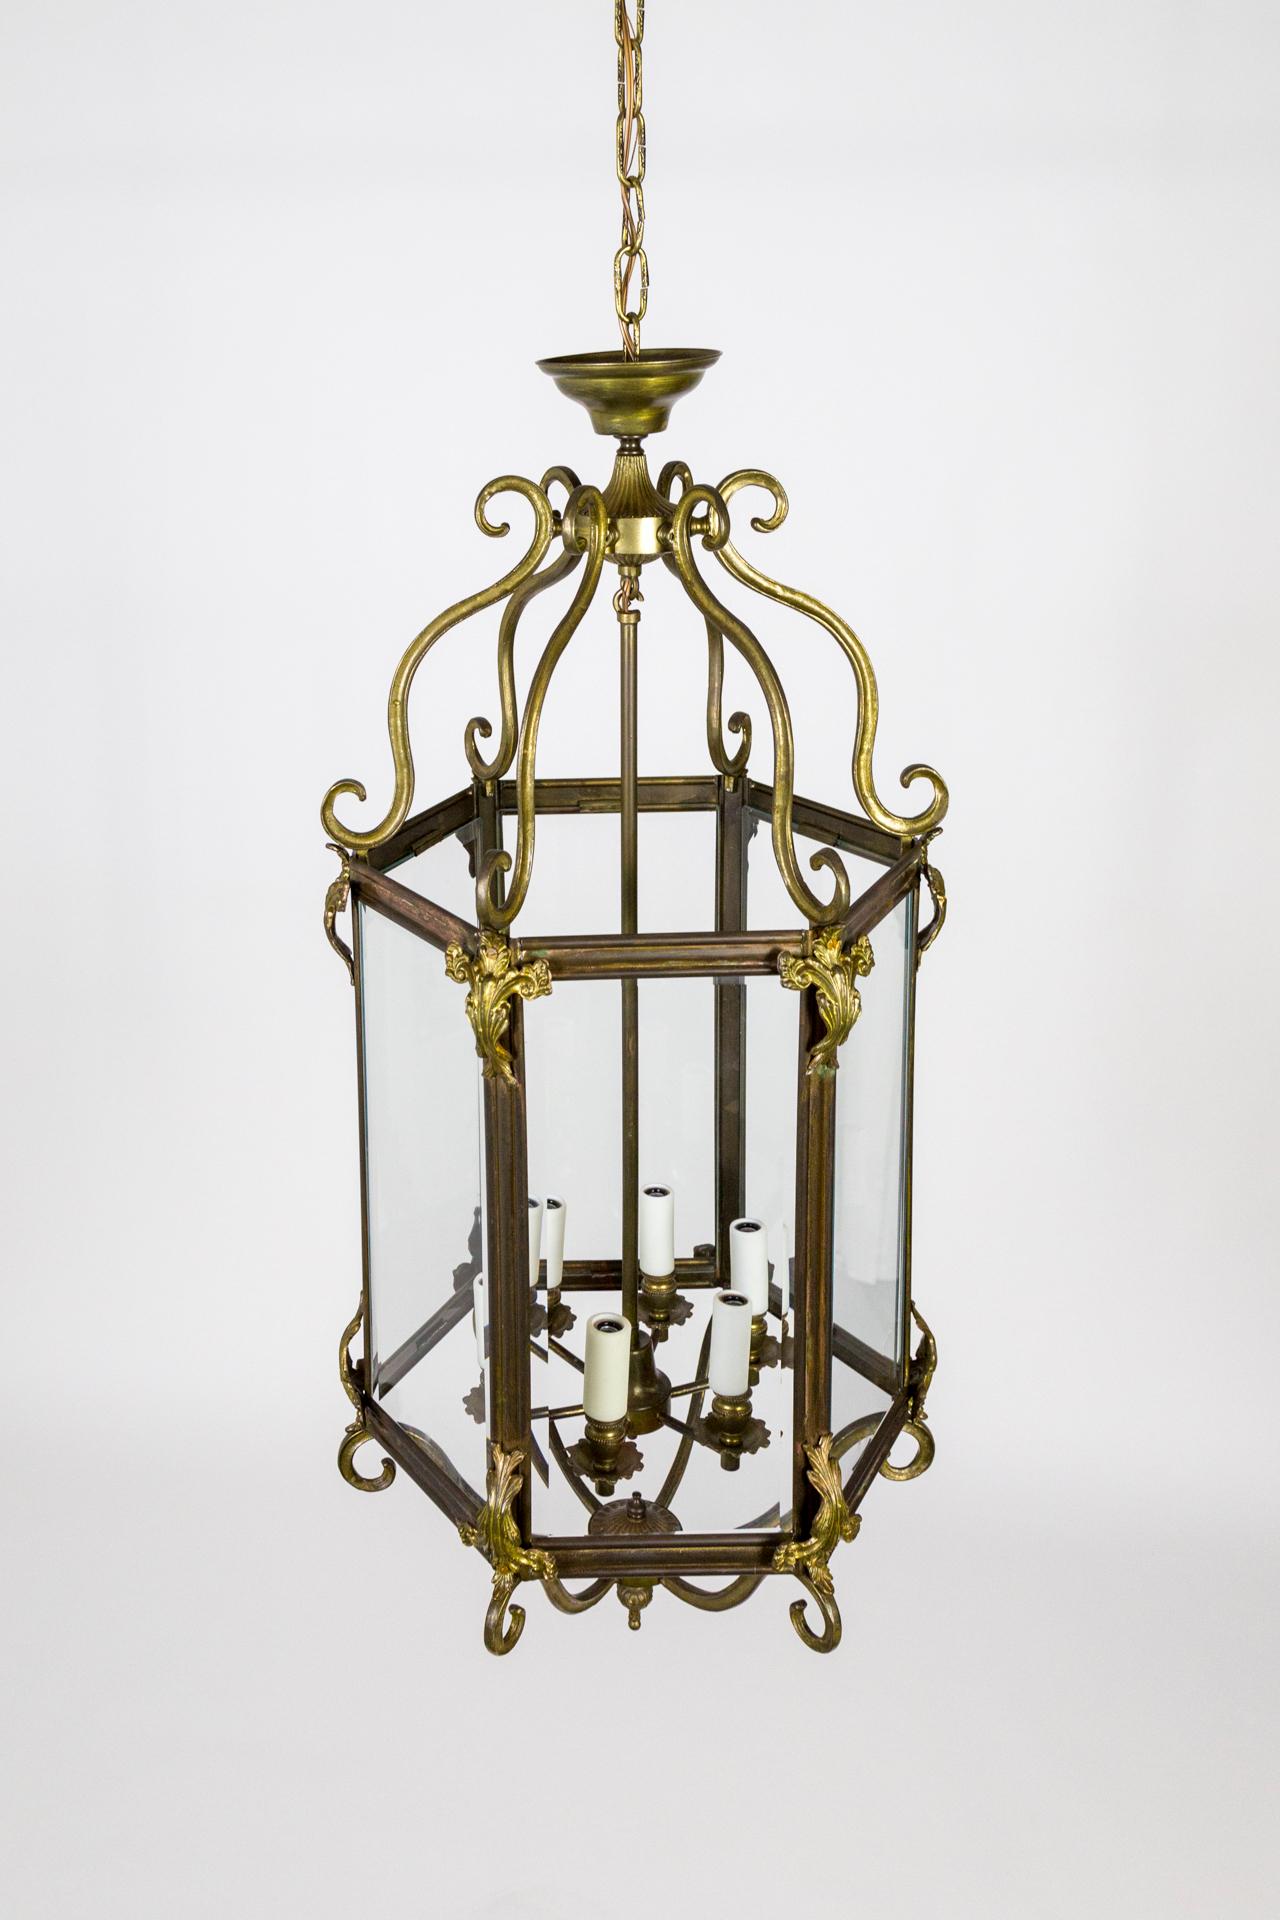 Large Regency 6 Panel Brass Lantern w/ Scrolls Acanthus Leaves For Sale 3